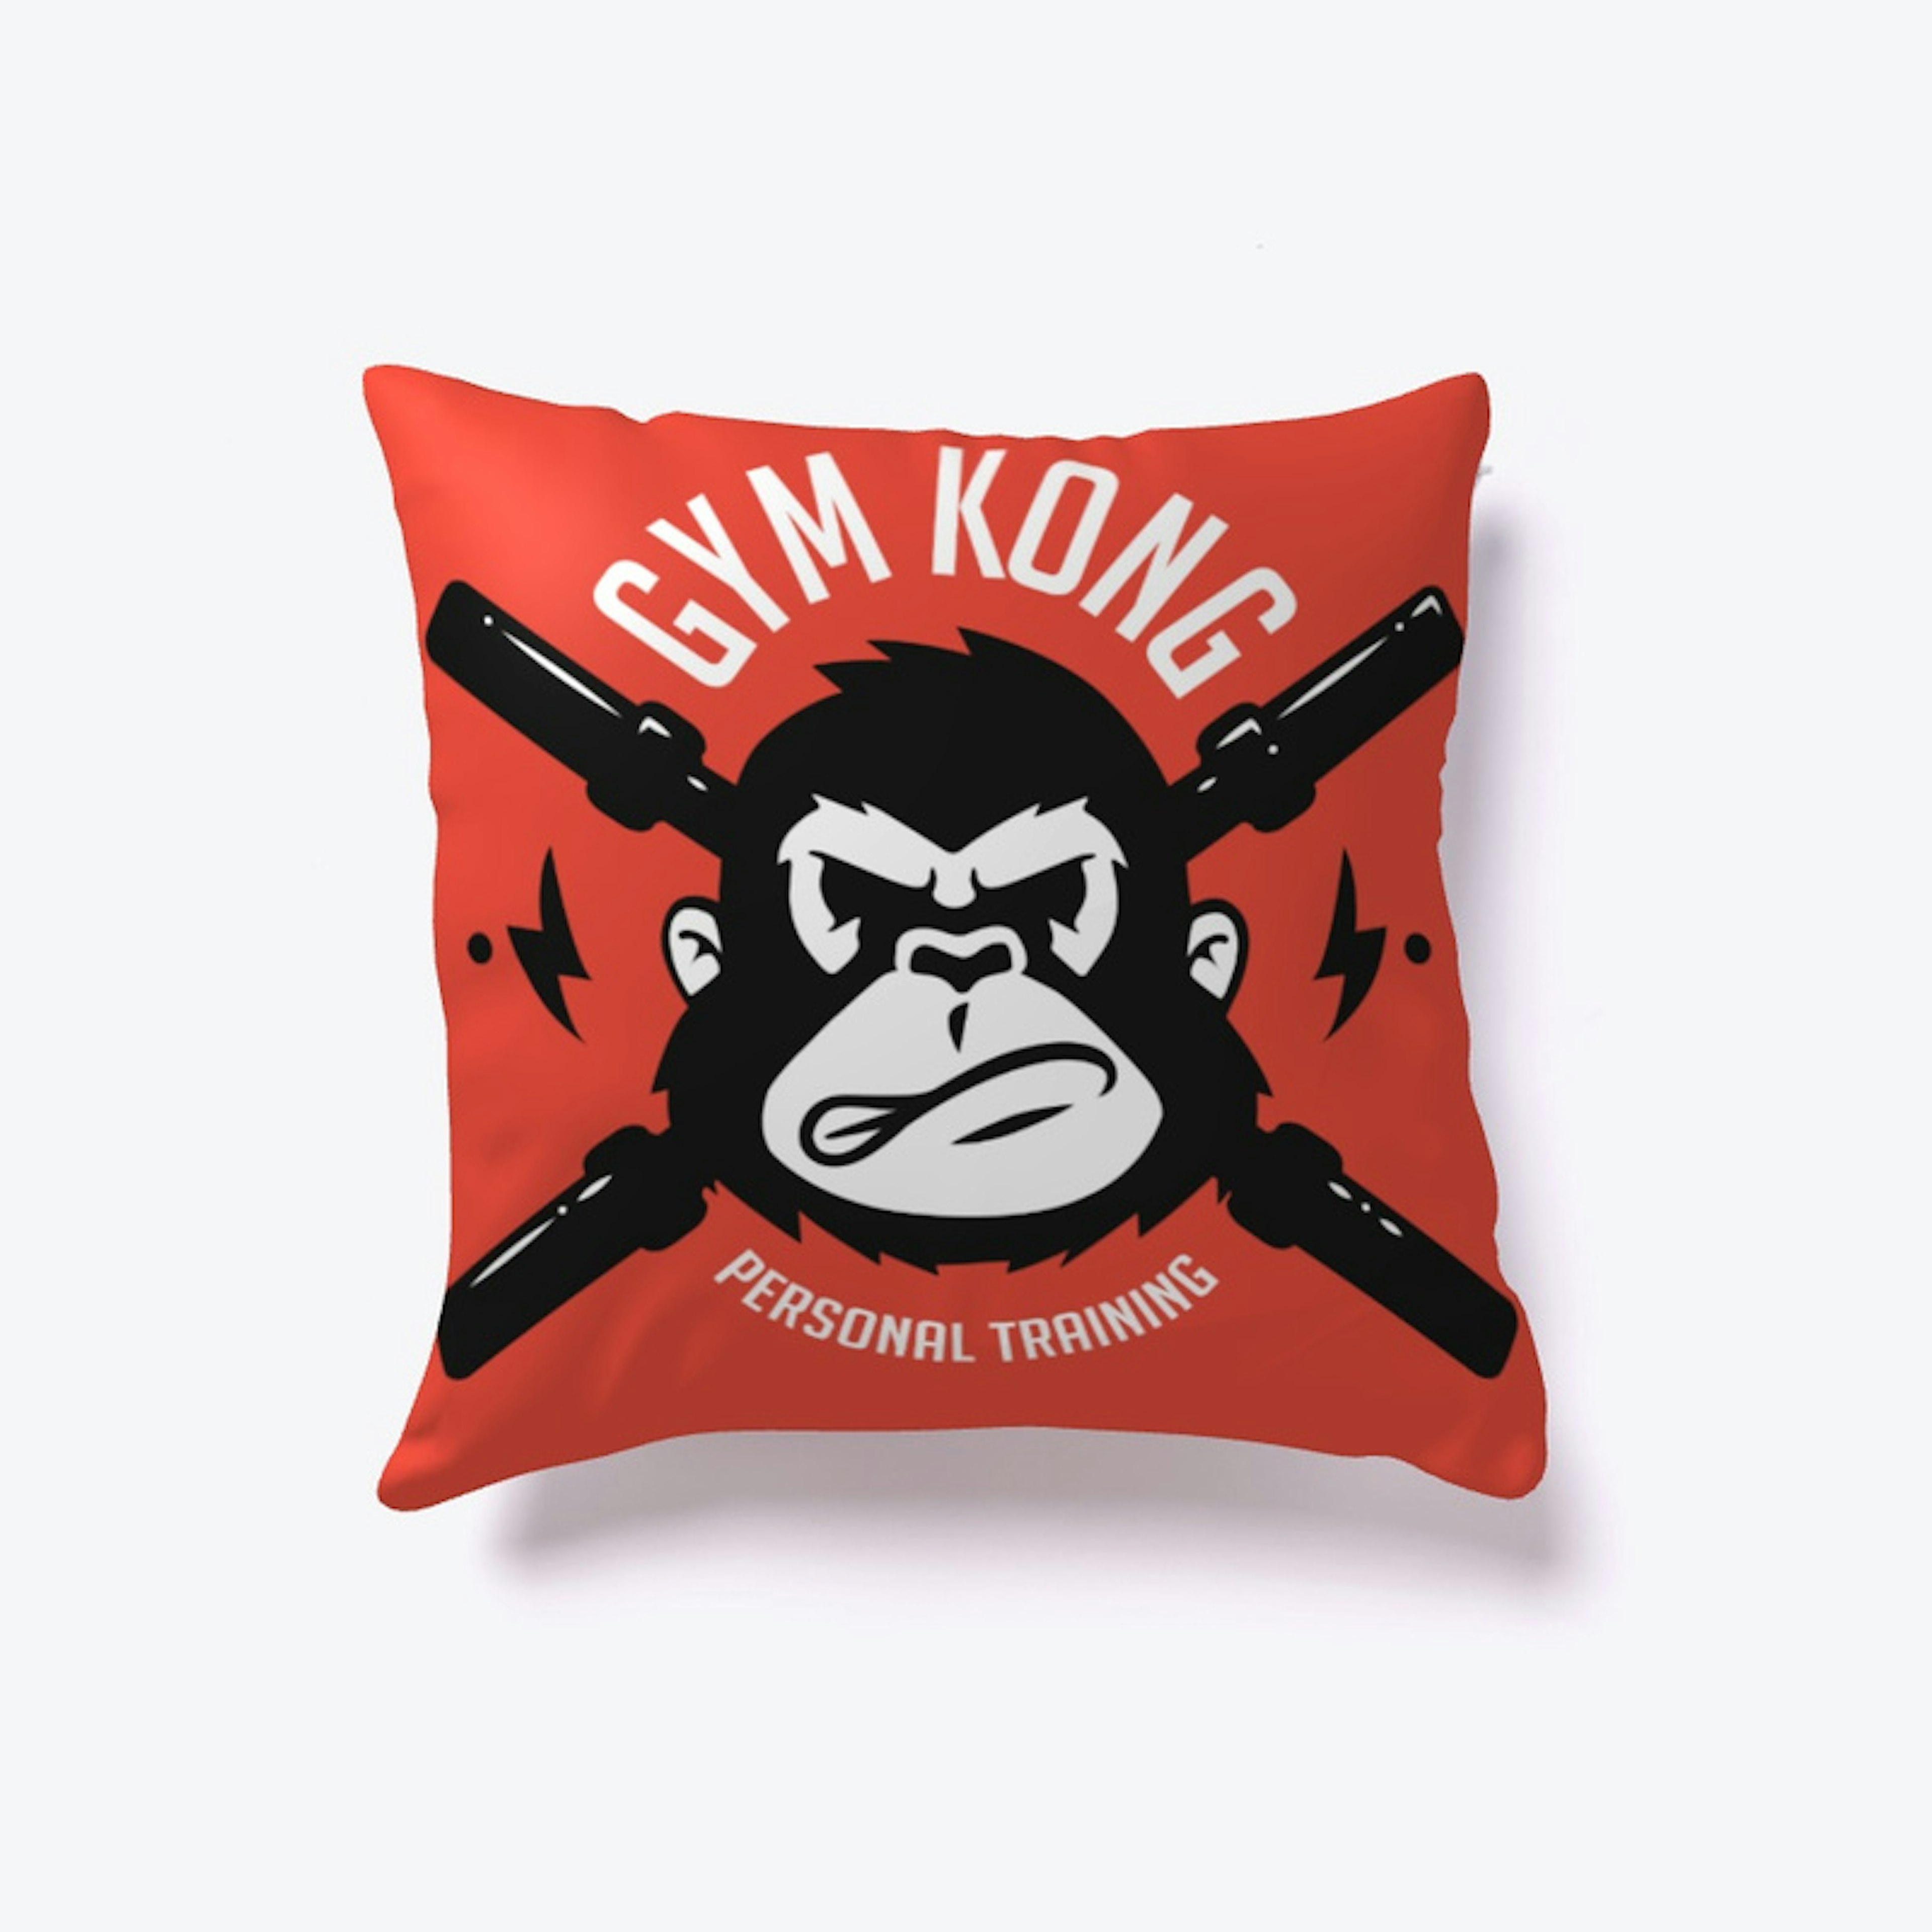 Gym Kong Logo Pillow